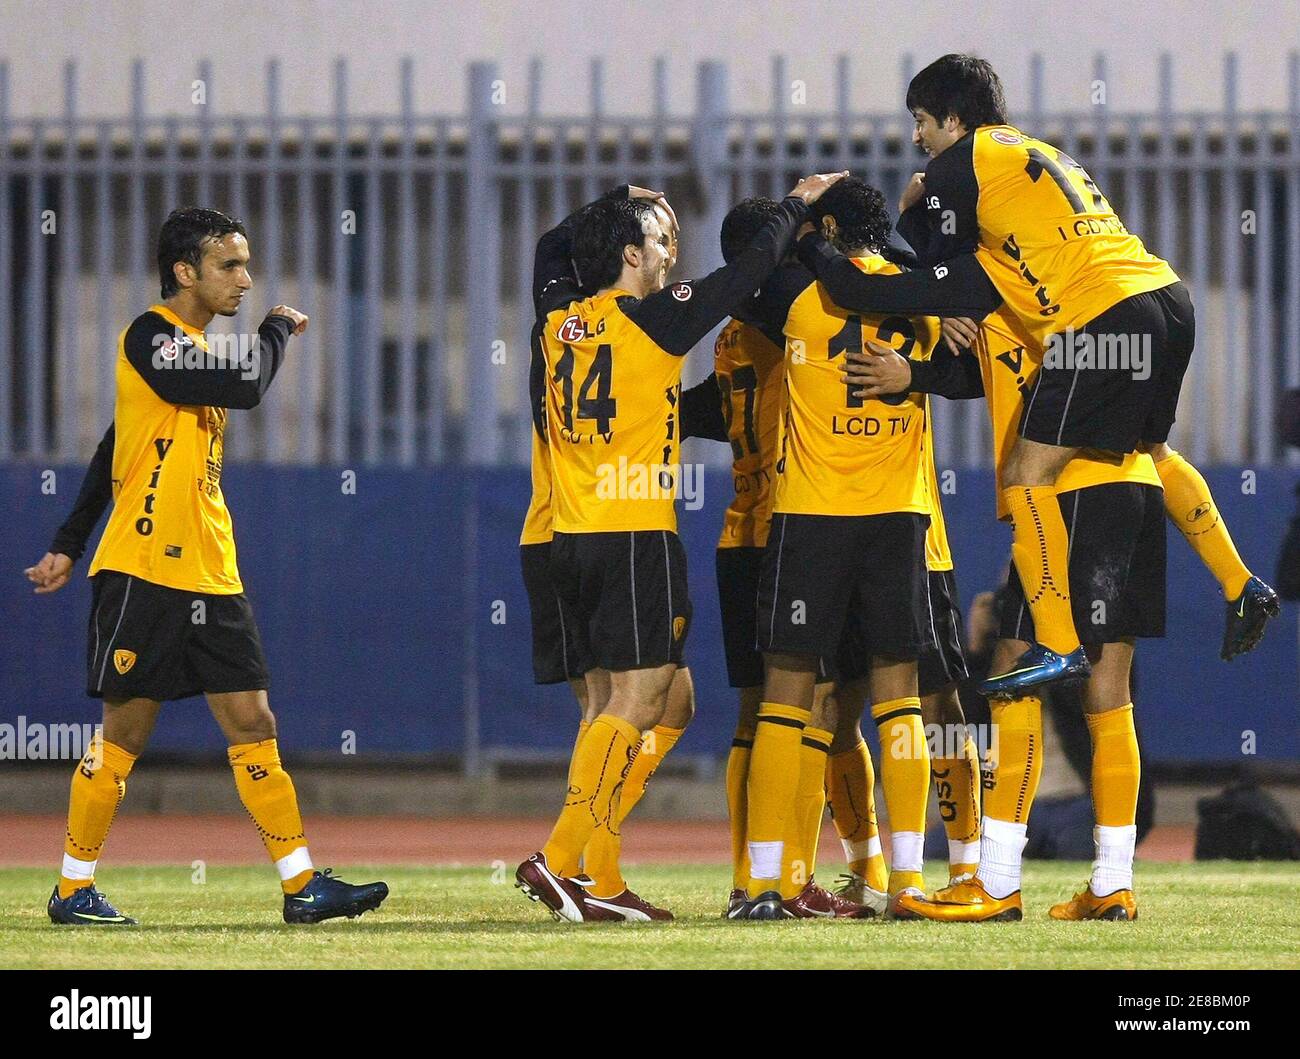 Qadsia's players celebrate after scoring against Salmiya during their  Kuwaiti Premier League soccer match in Kuwait City February 8, 2009.  REUTERS/Tariq AlAli (KUWAIT Stock Photo - Alamy